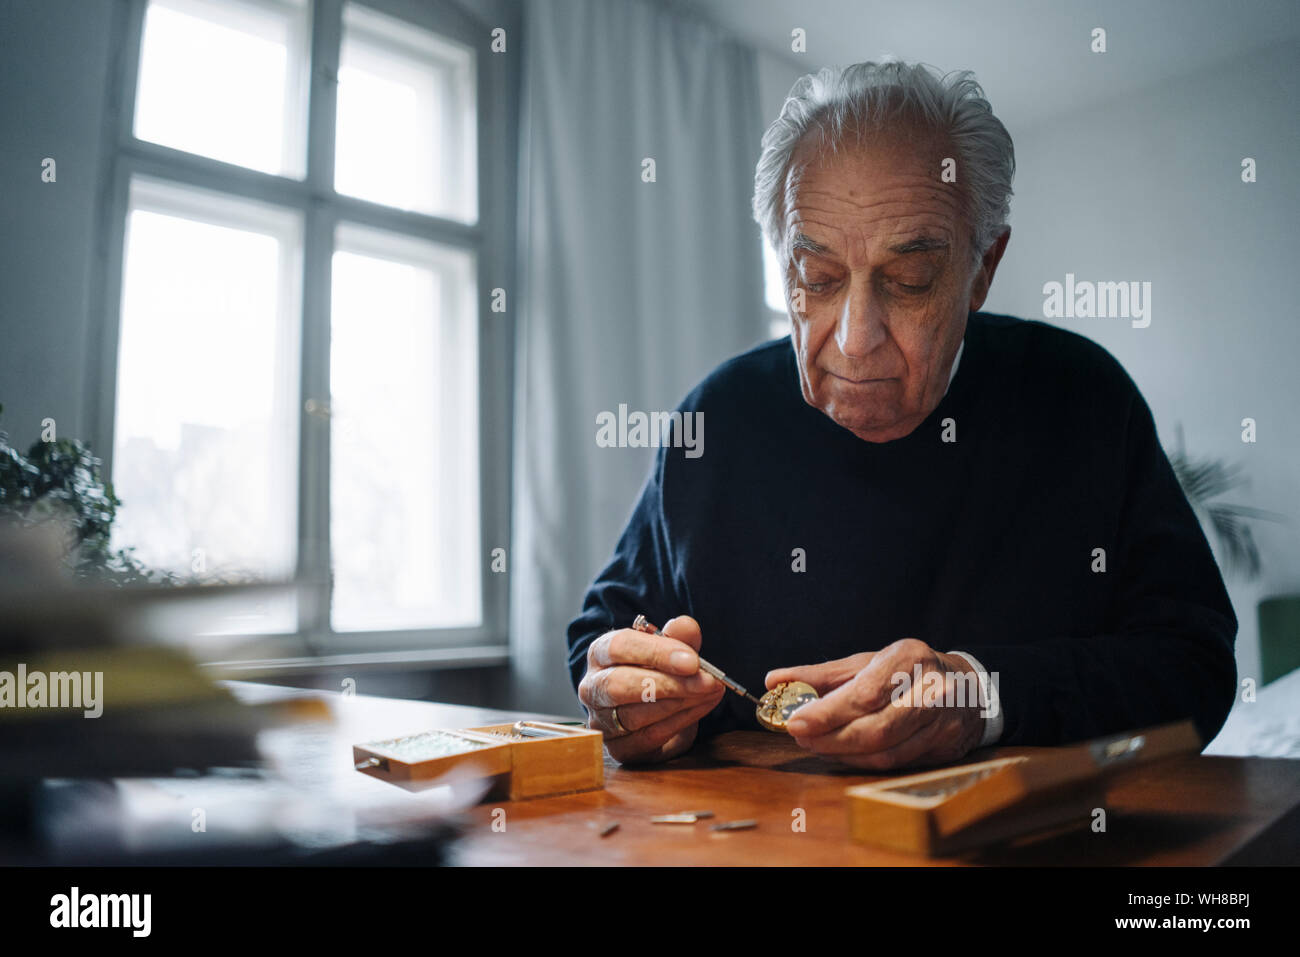 Senior man repairing a watch at home Stock Photo